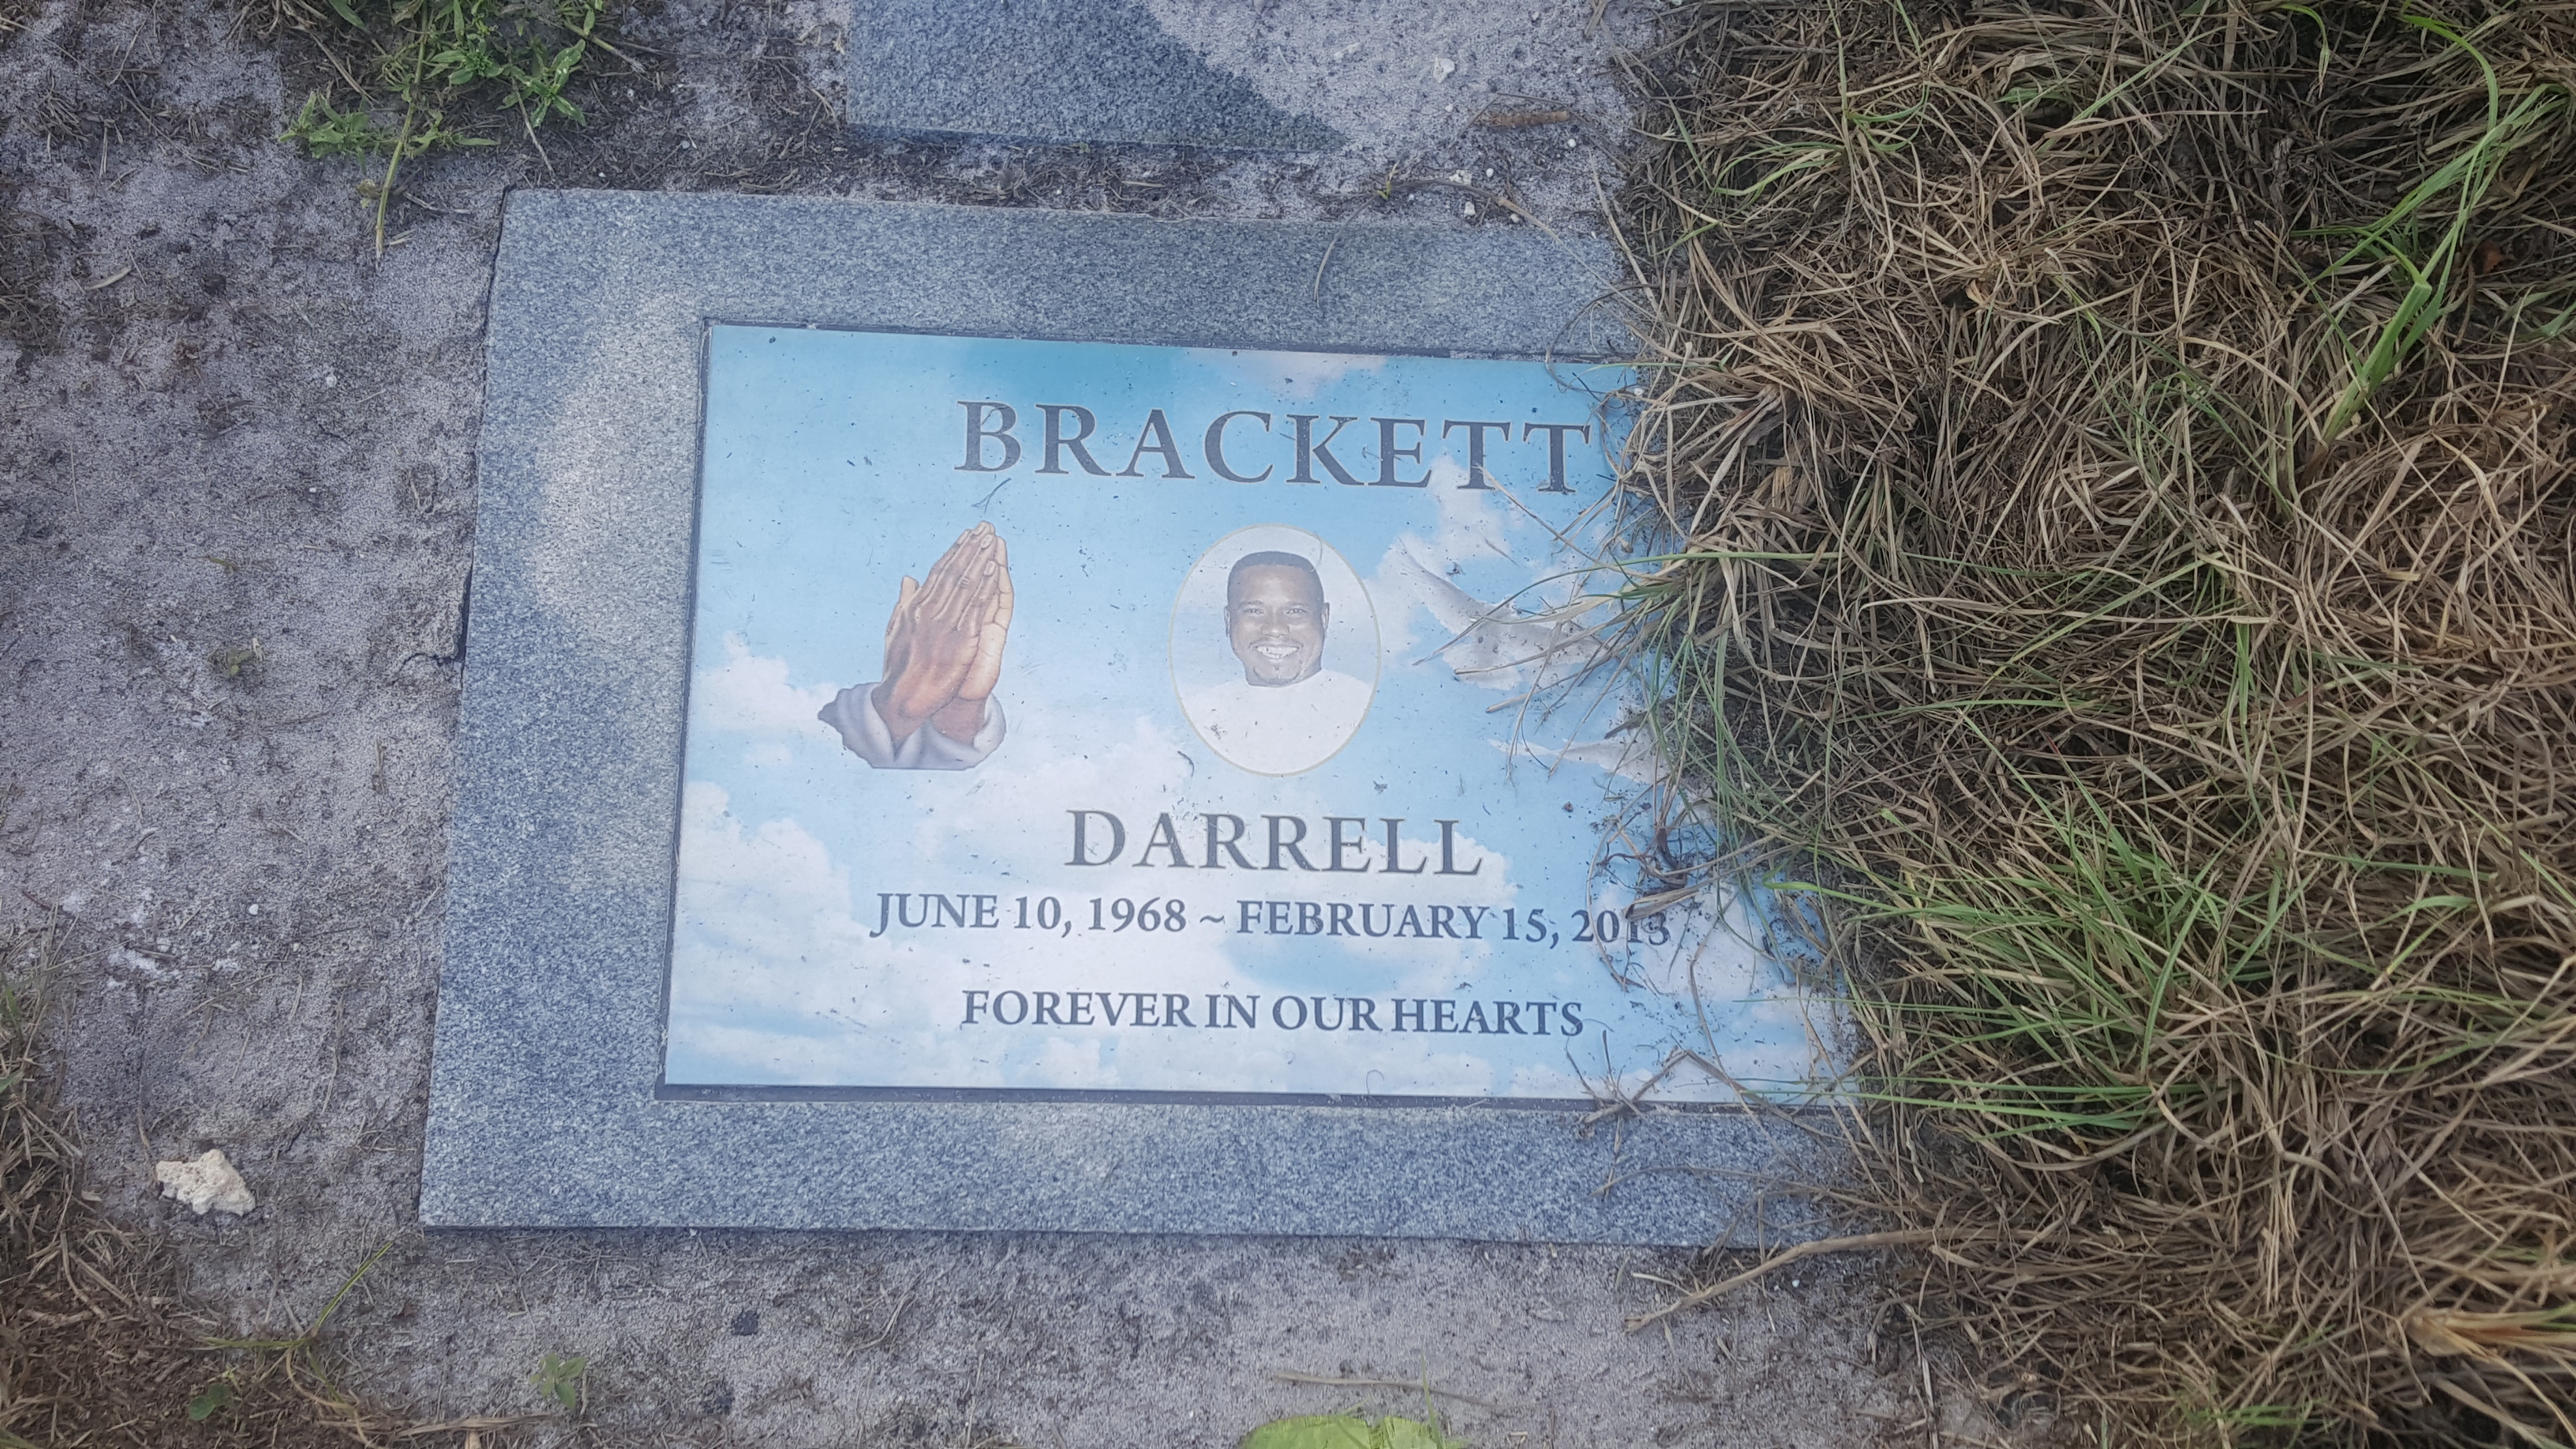 Darrell Brackett